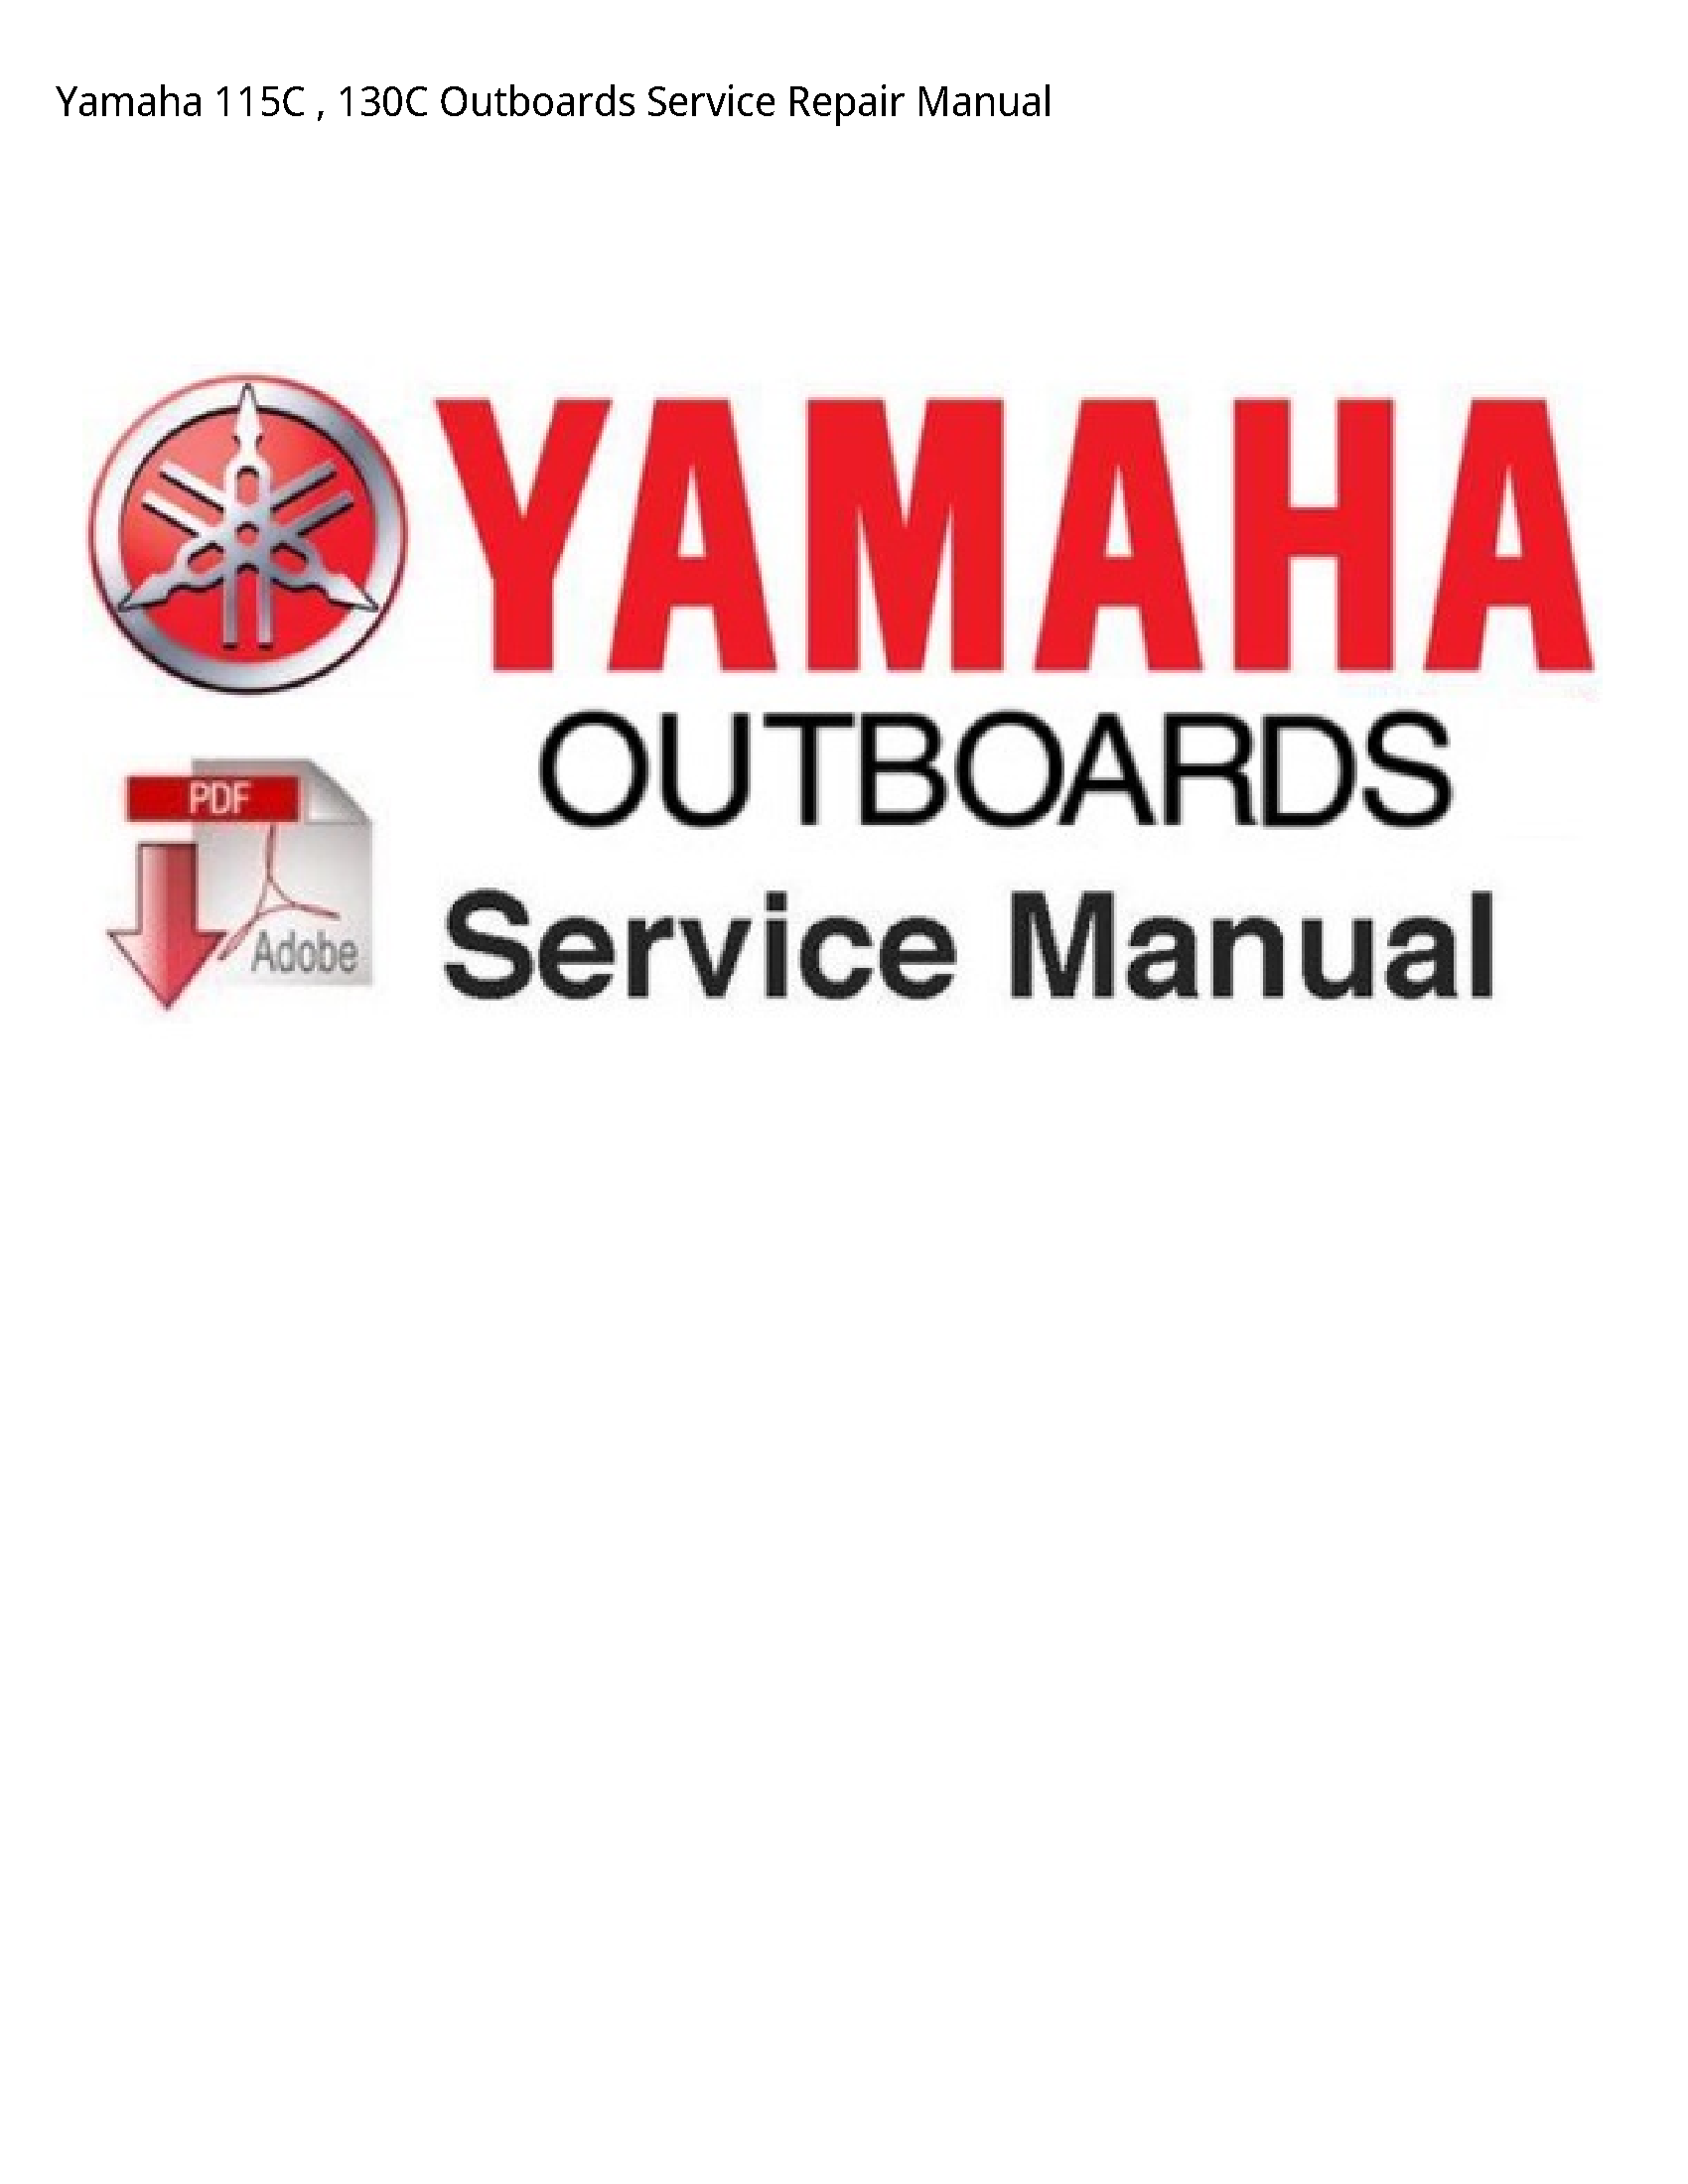 Yamaha 115C Outboards manual